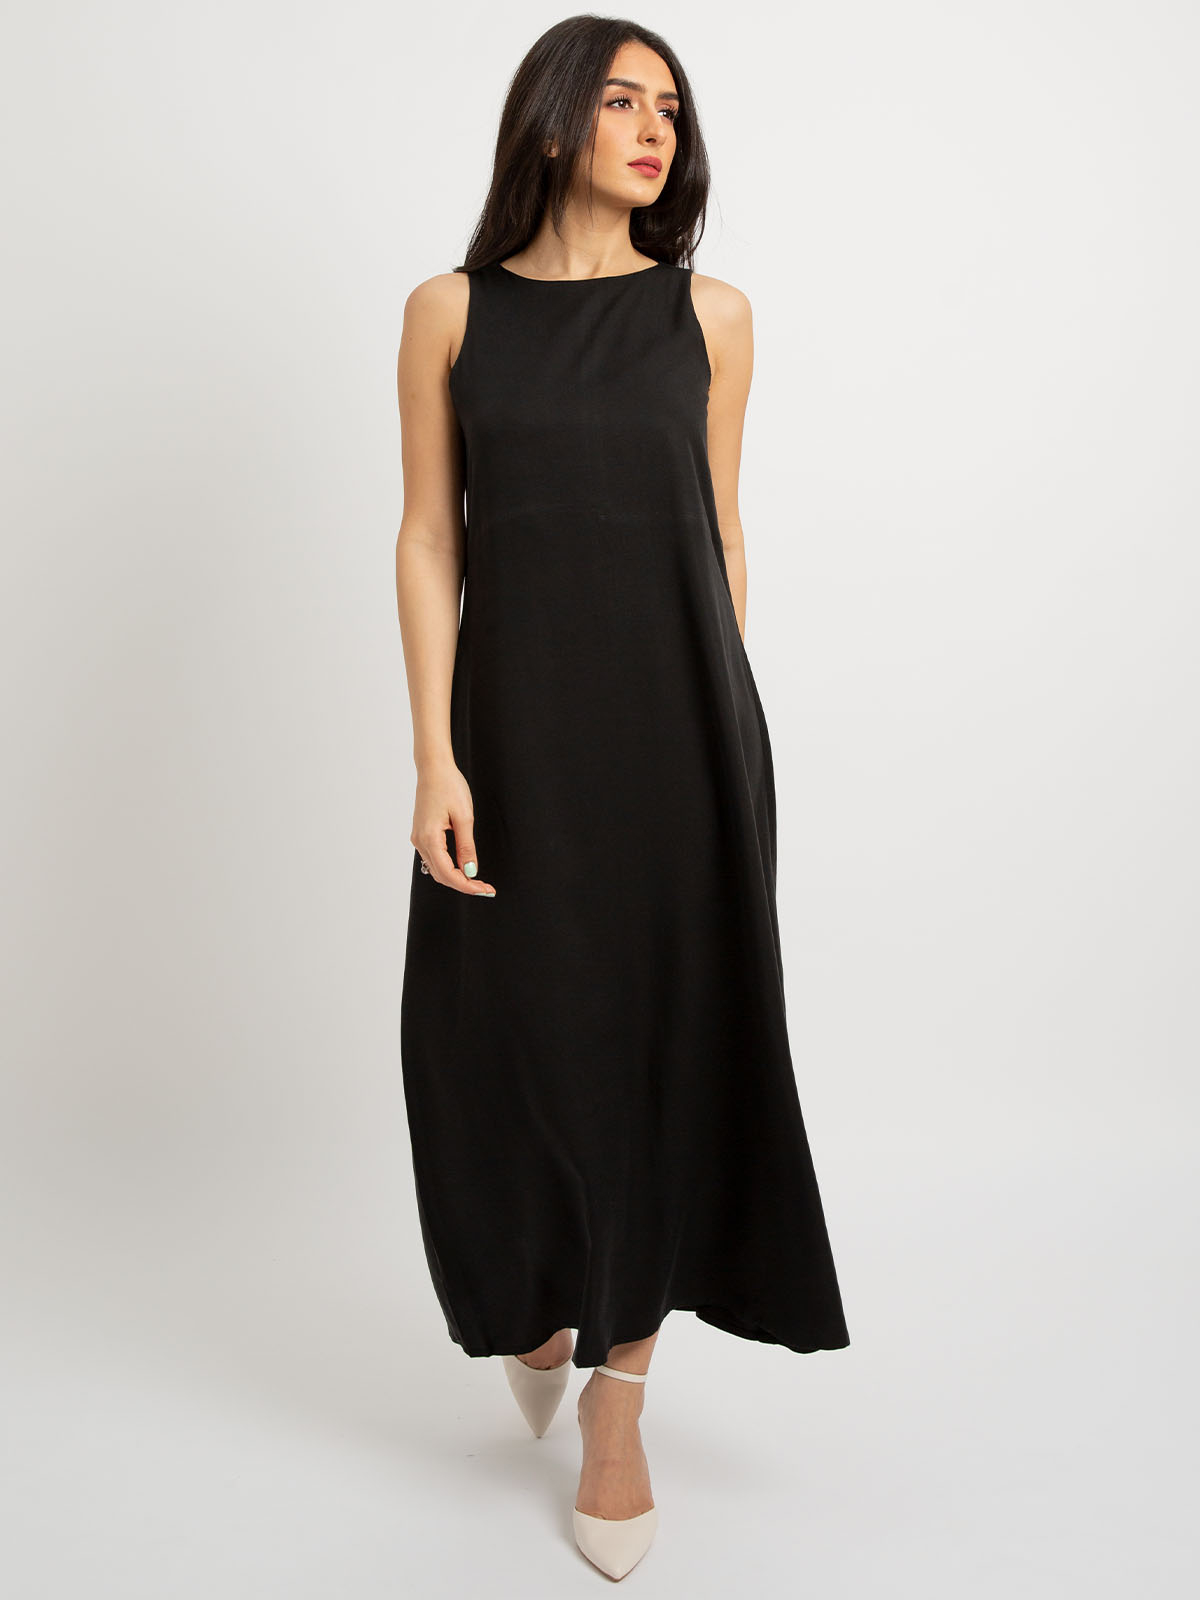 Black - Sleeveless Long Dress